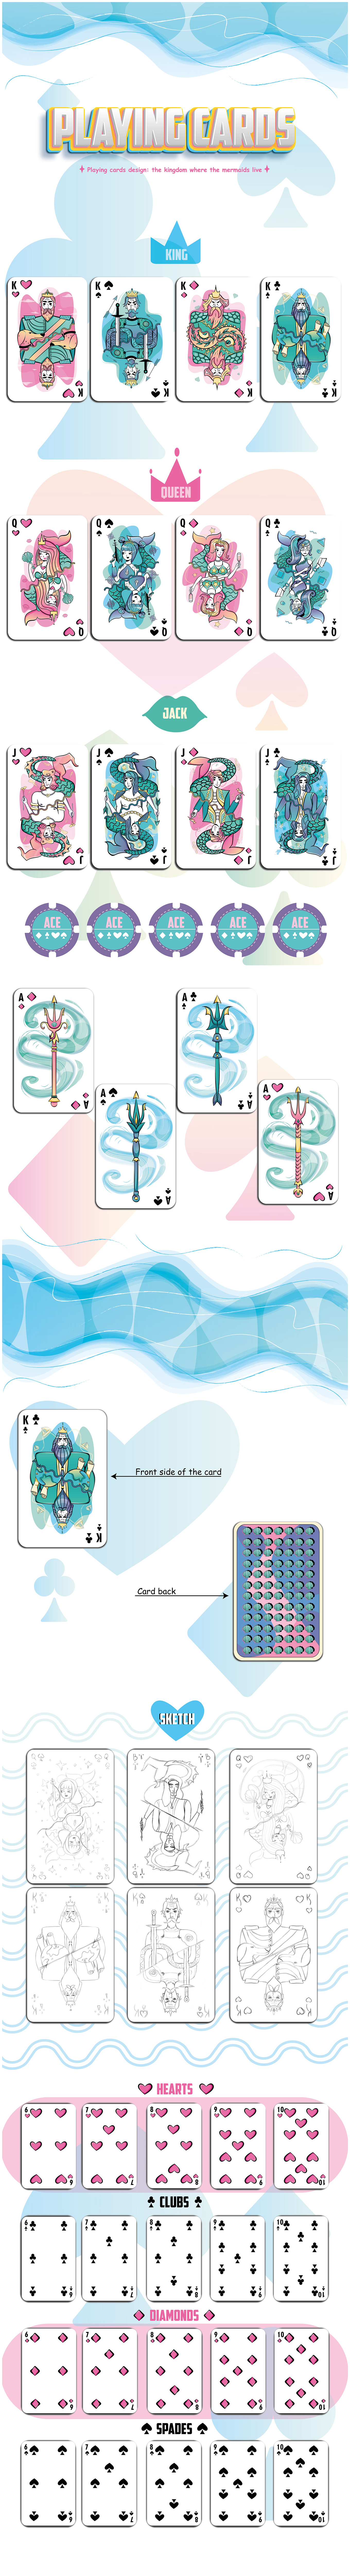 Playing Cards fantastic artwork adobe illustrator vector Adobe Photoshop Illustrator digital illustration Vector Illustration mermaids